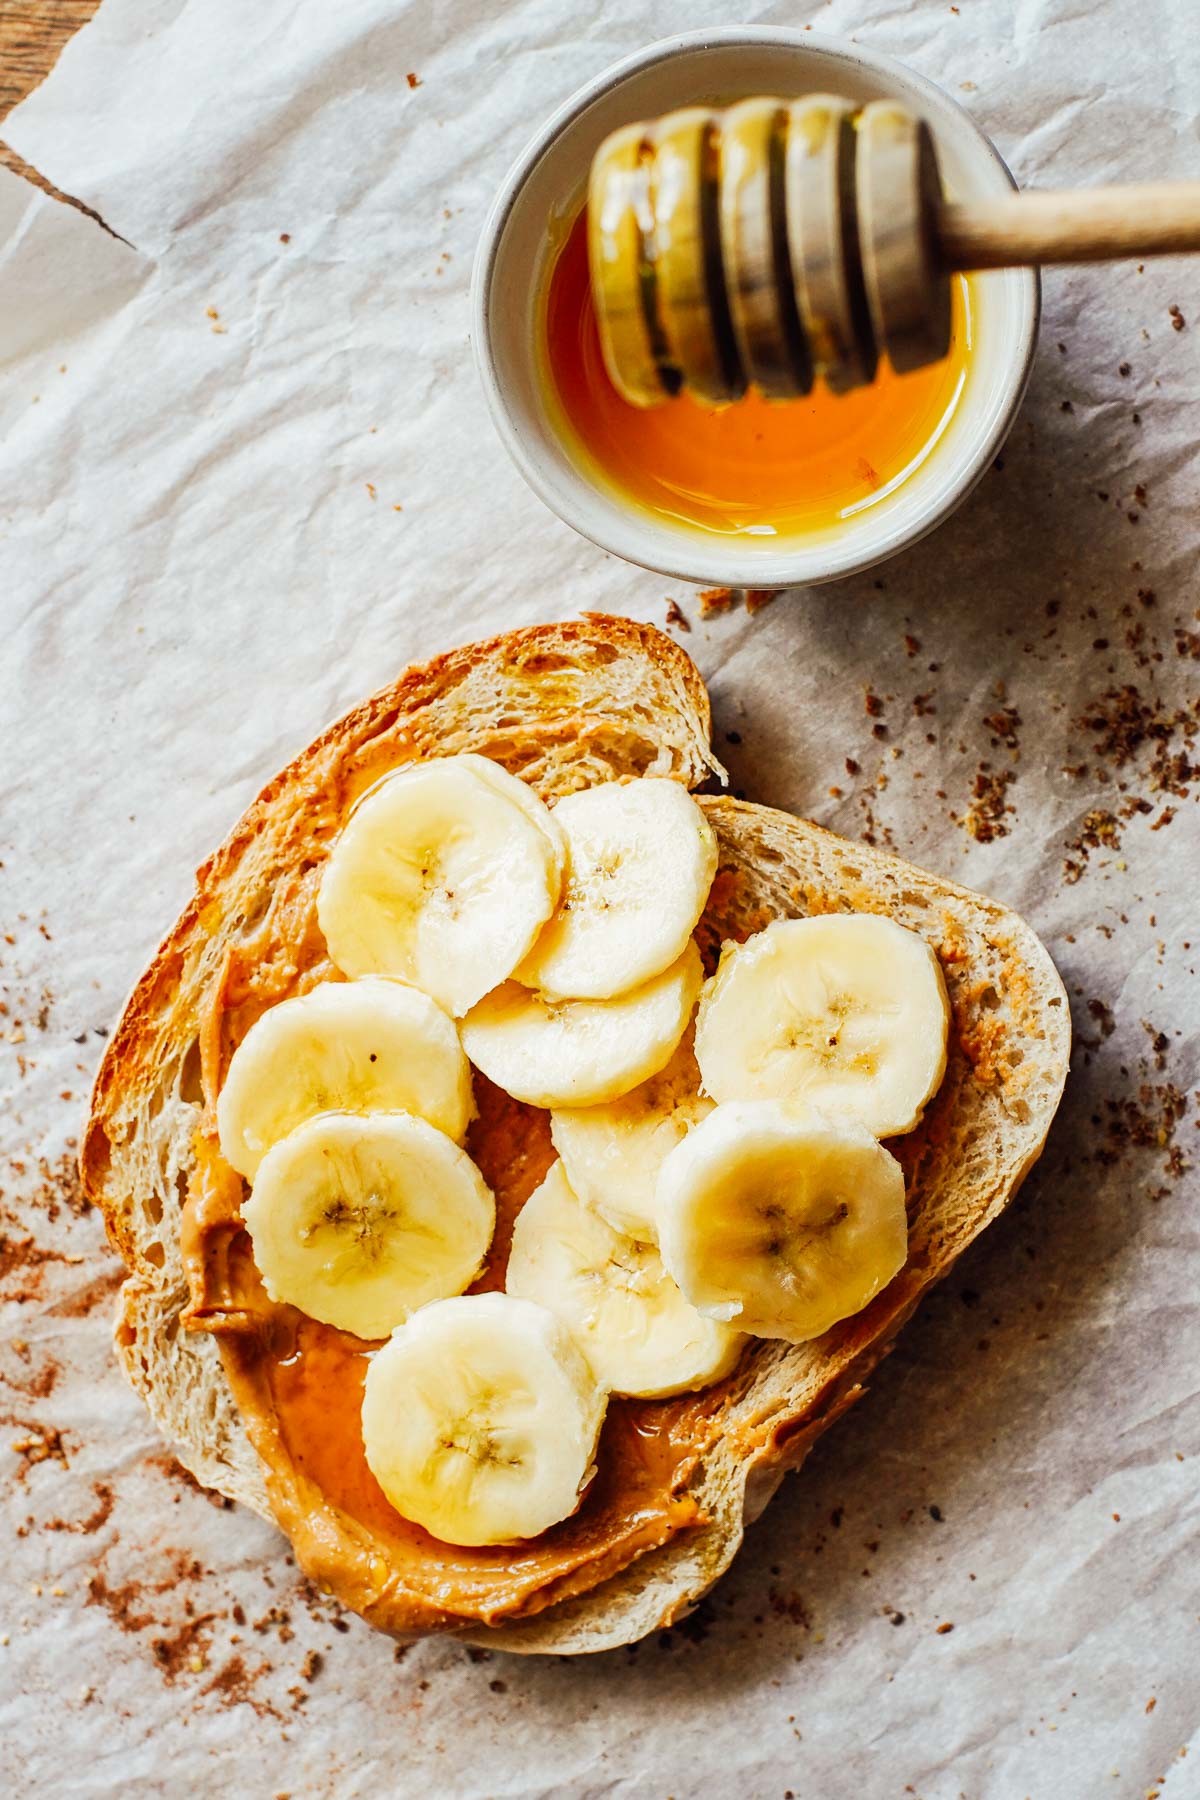 Toast with peanut butter, banana, and honey.